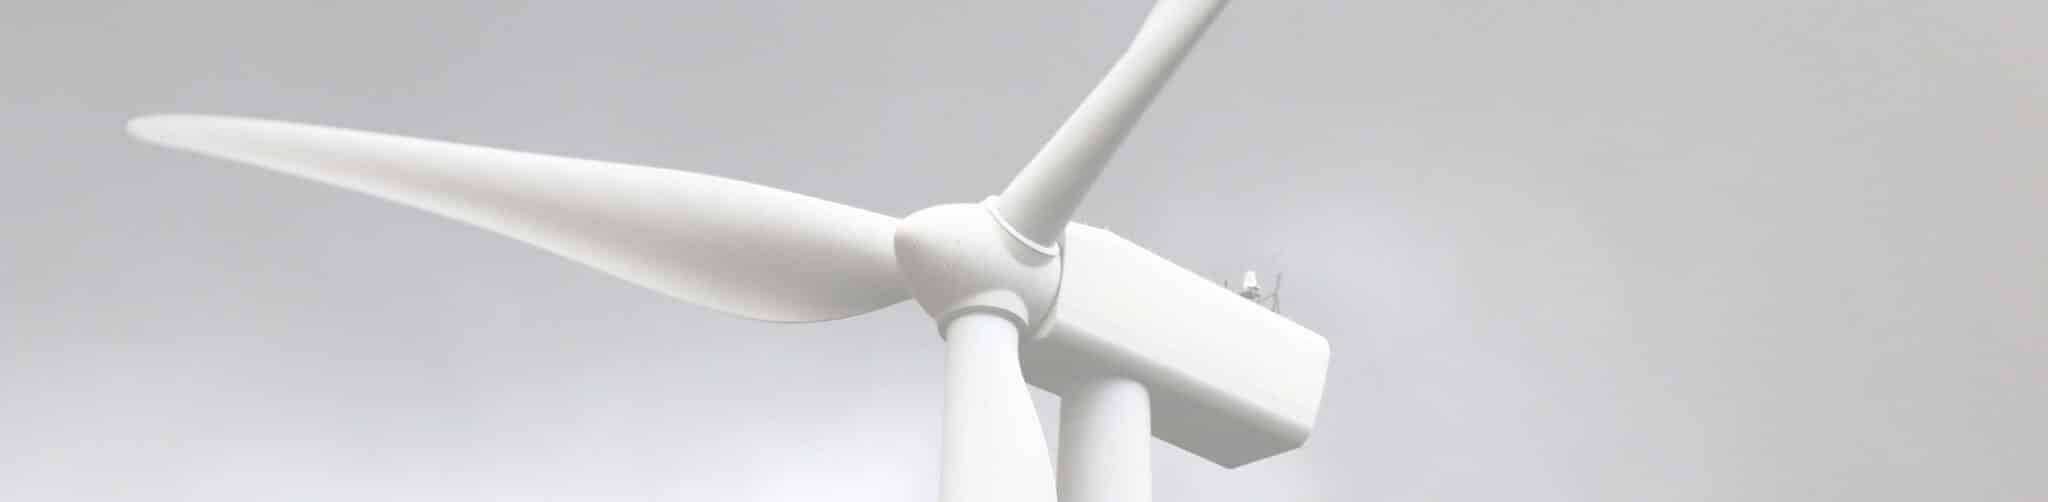 Cabecera sector eolico alargada transparencia 40 scaled Sobre Windbotix